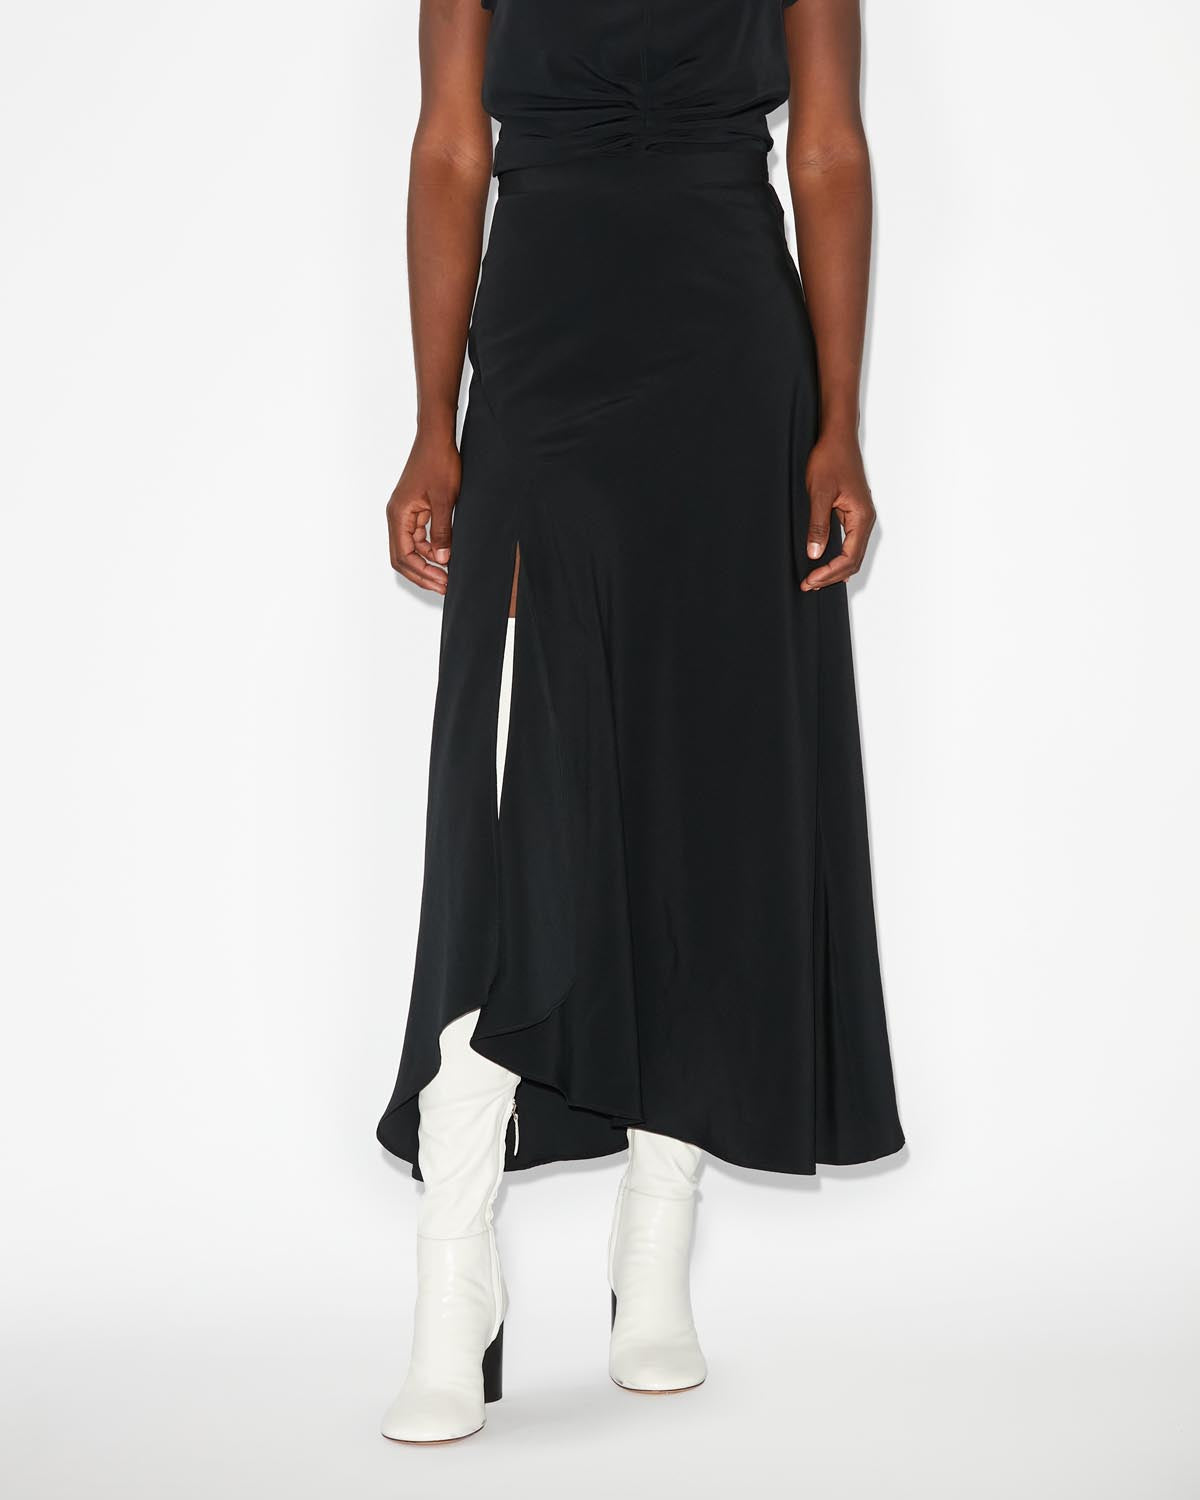 Sakura falda Woman Negro 4